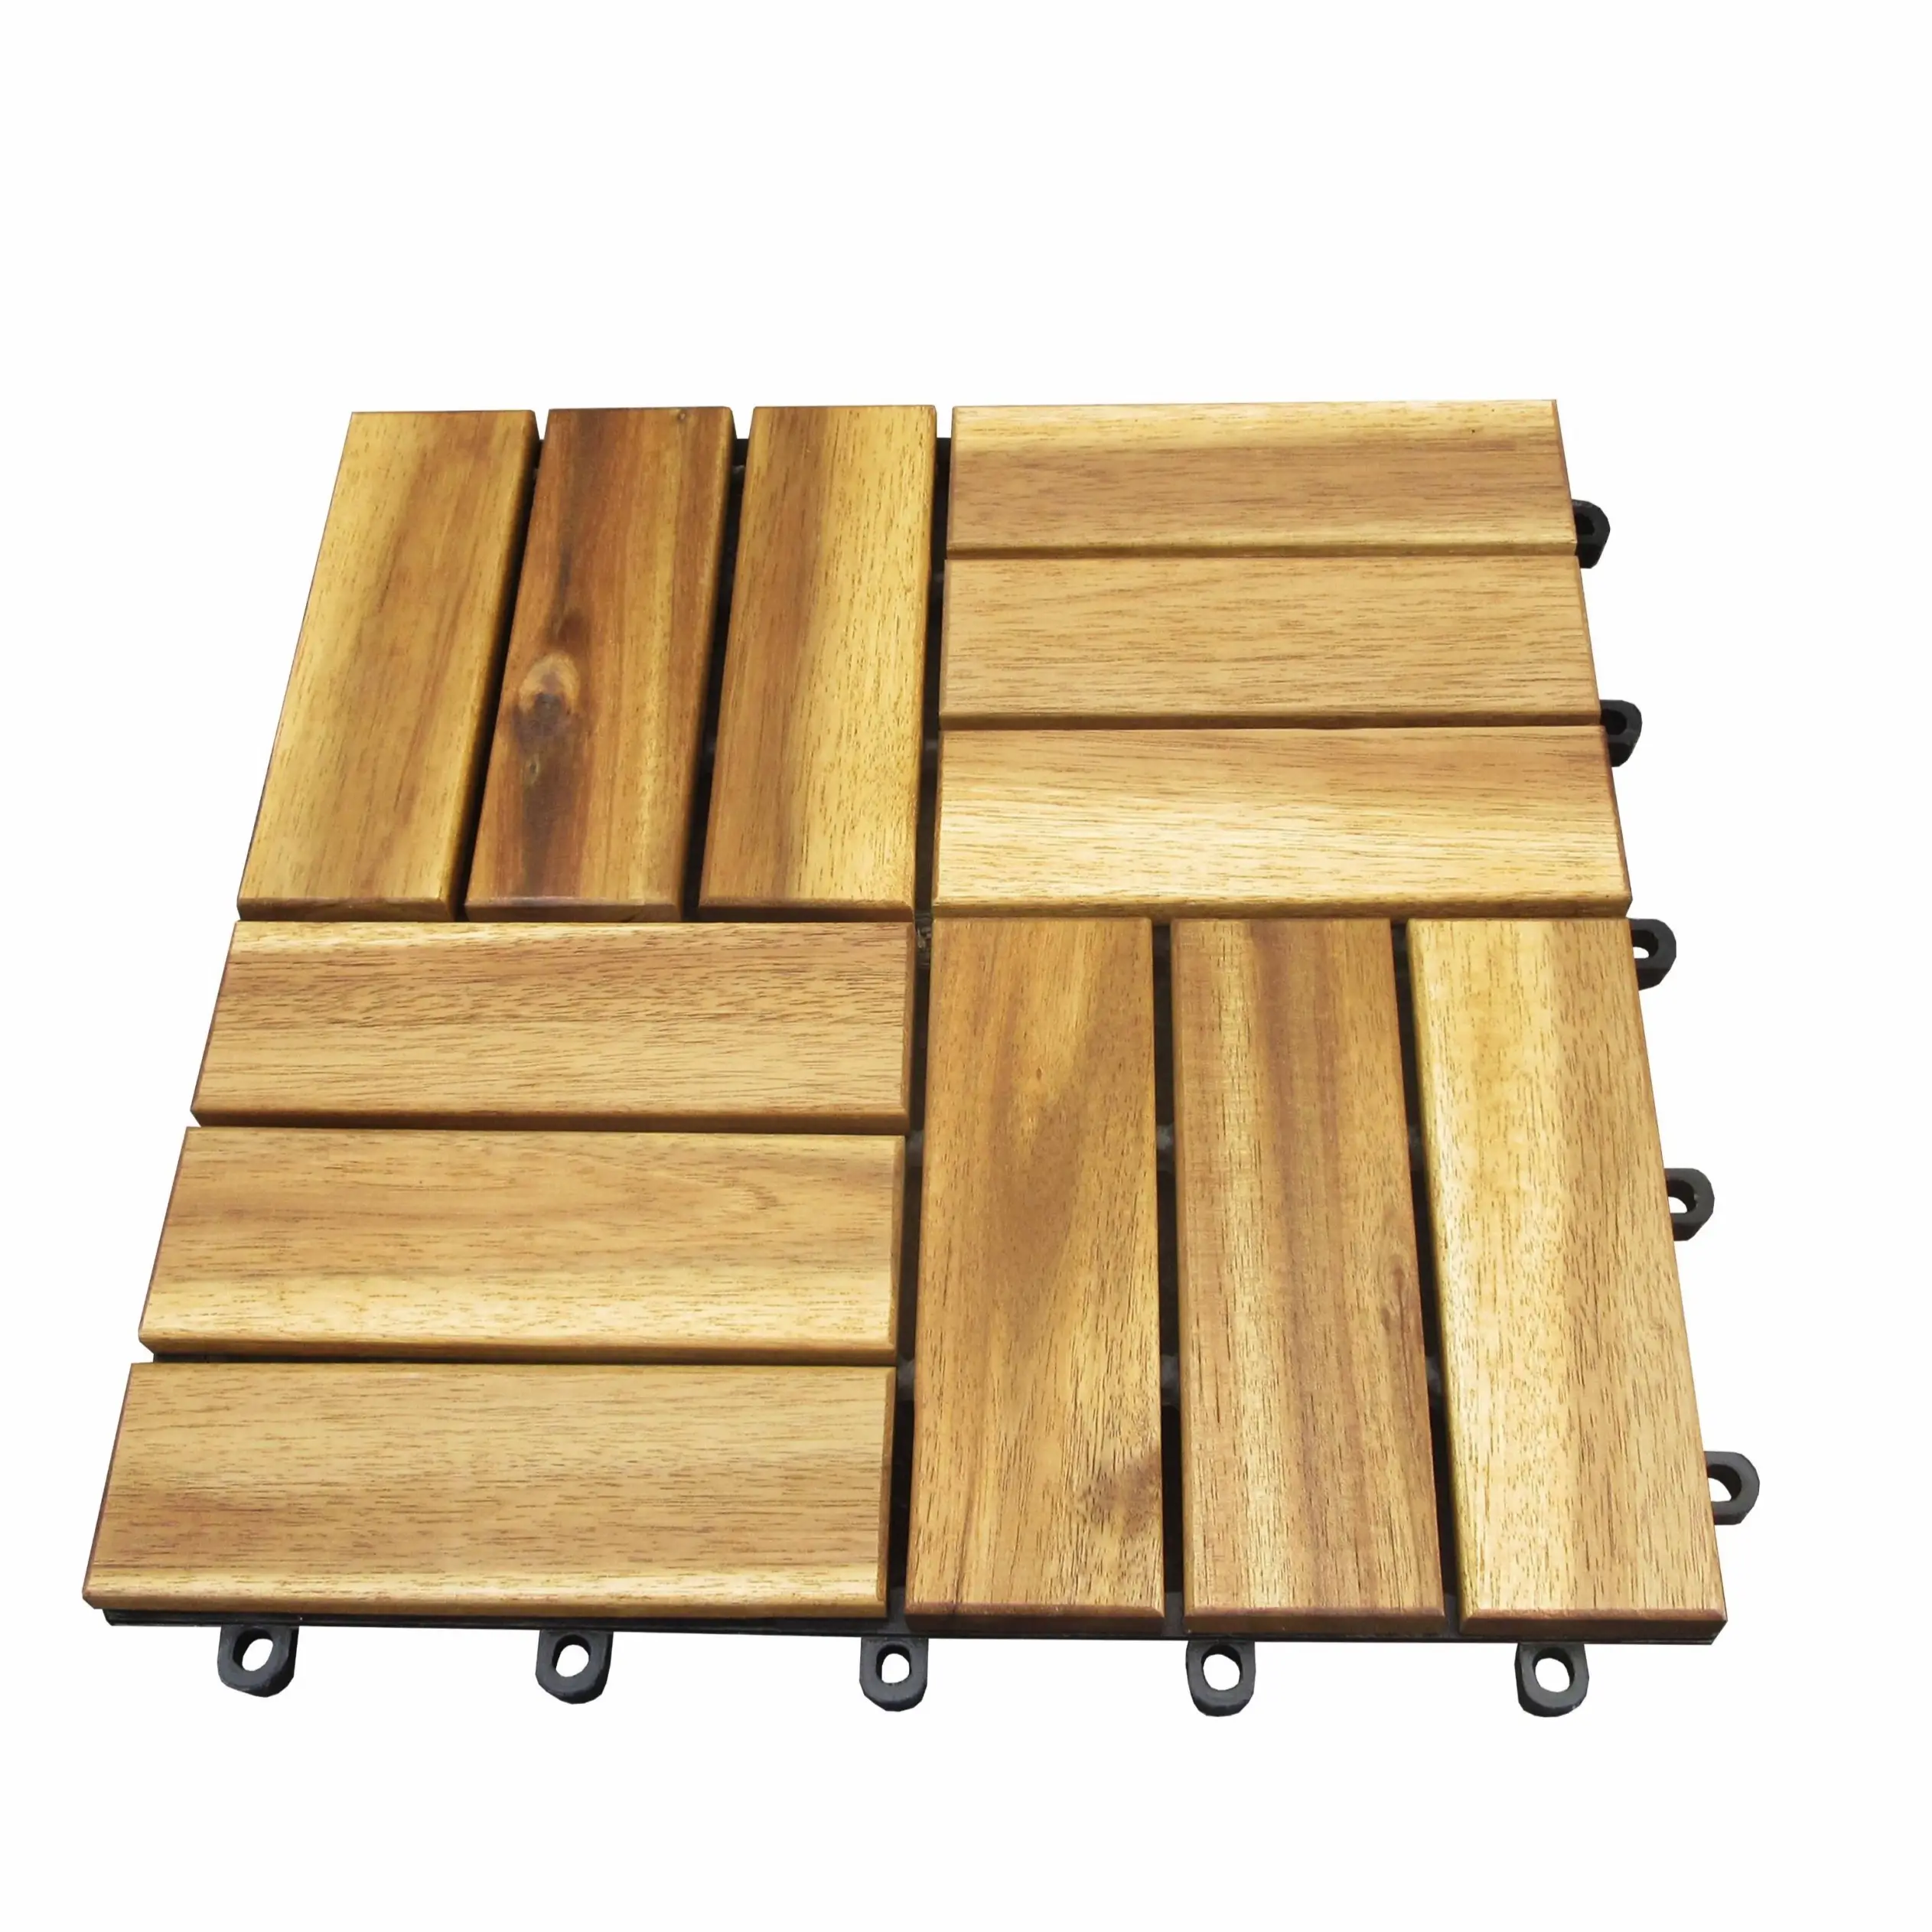 OEM FÁBRICA DE Vietnam baldosas de madera suelo 12 listones baldosas de madera de acacia para espacio al aire libre